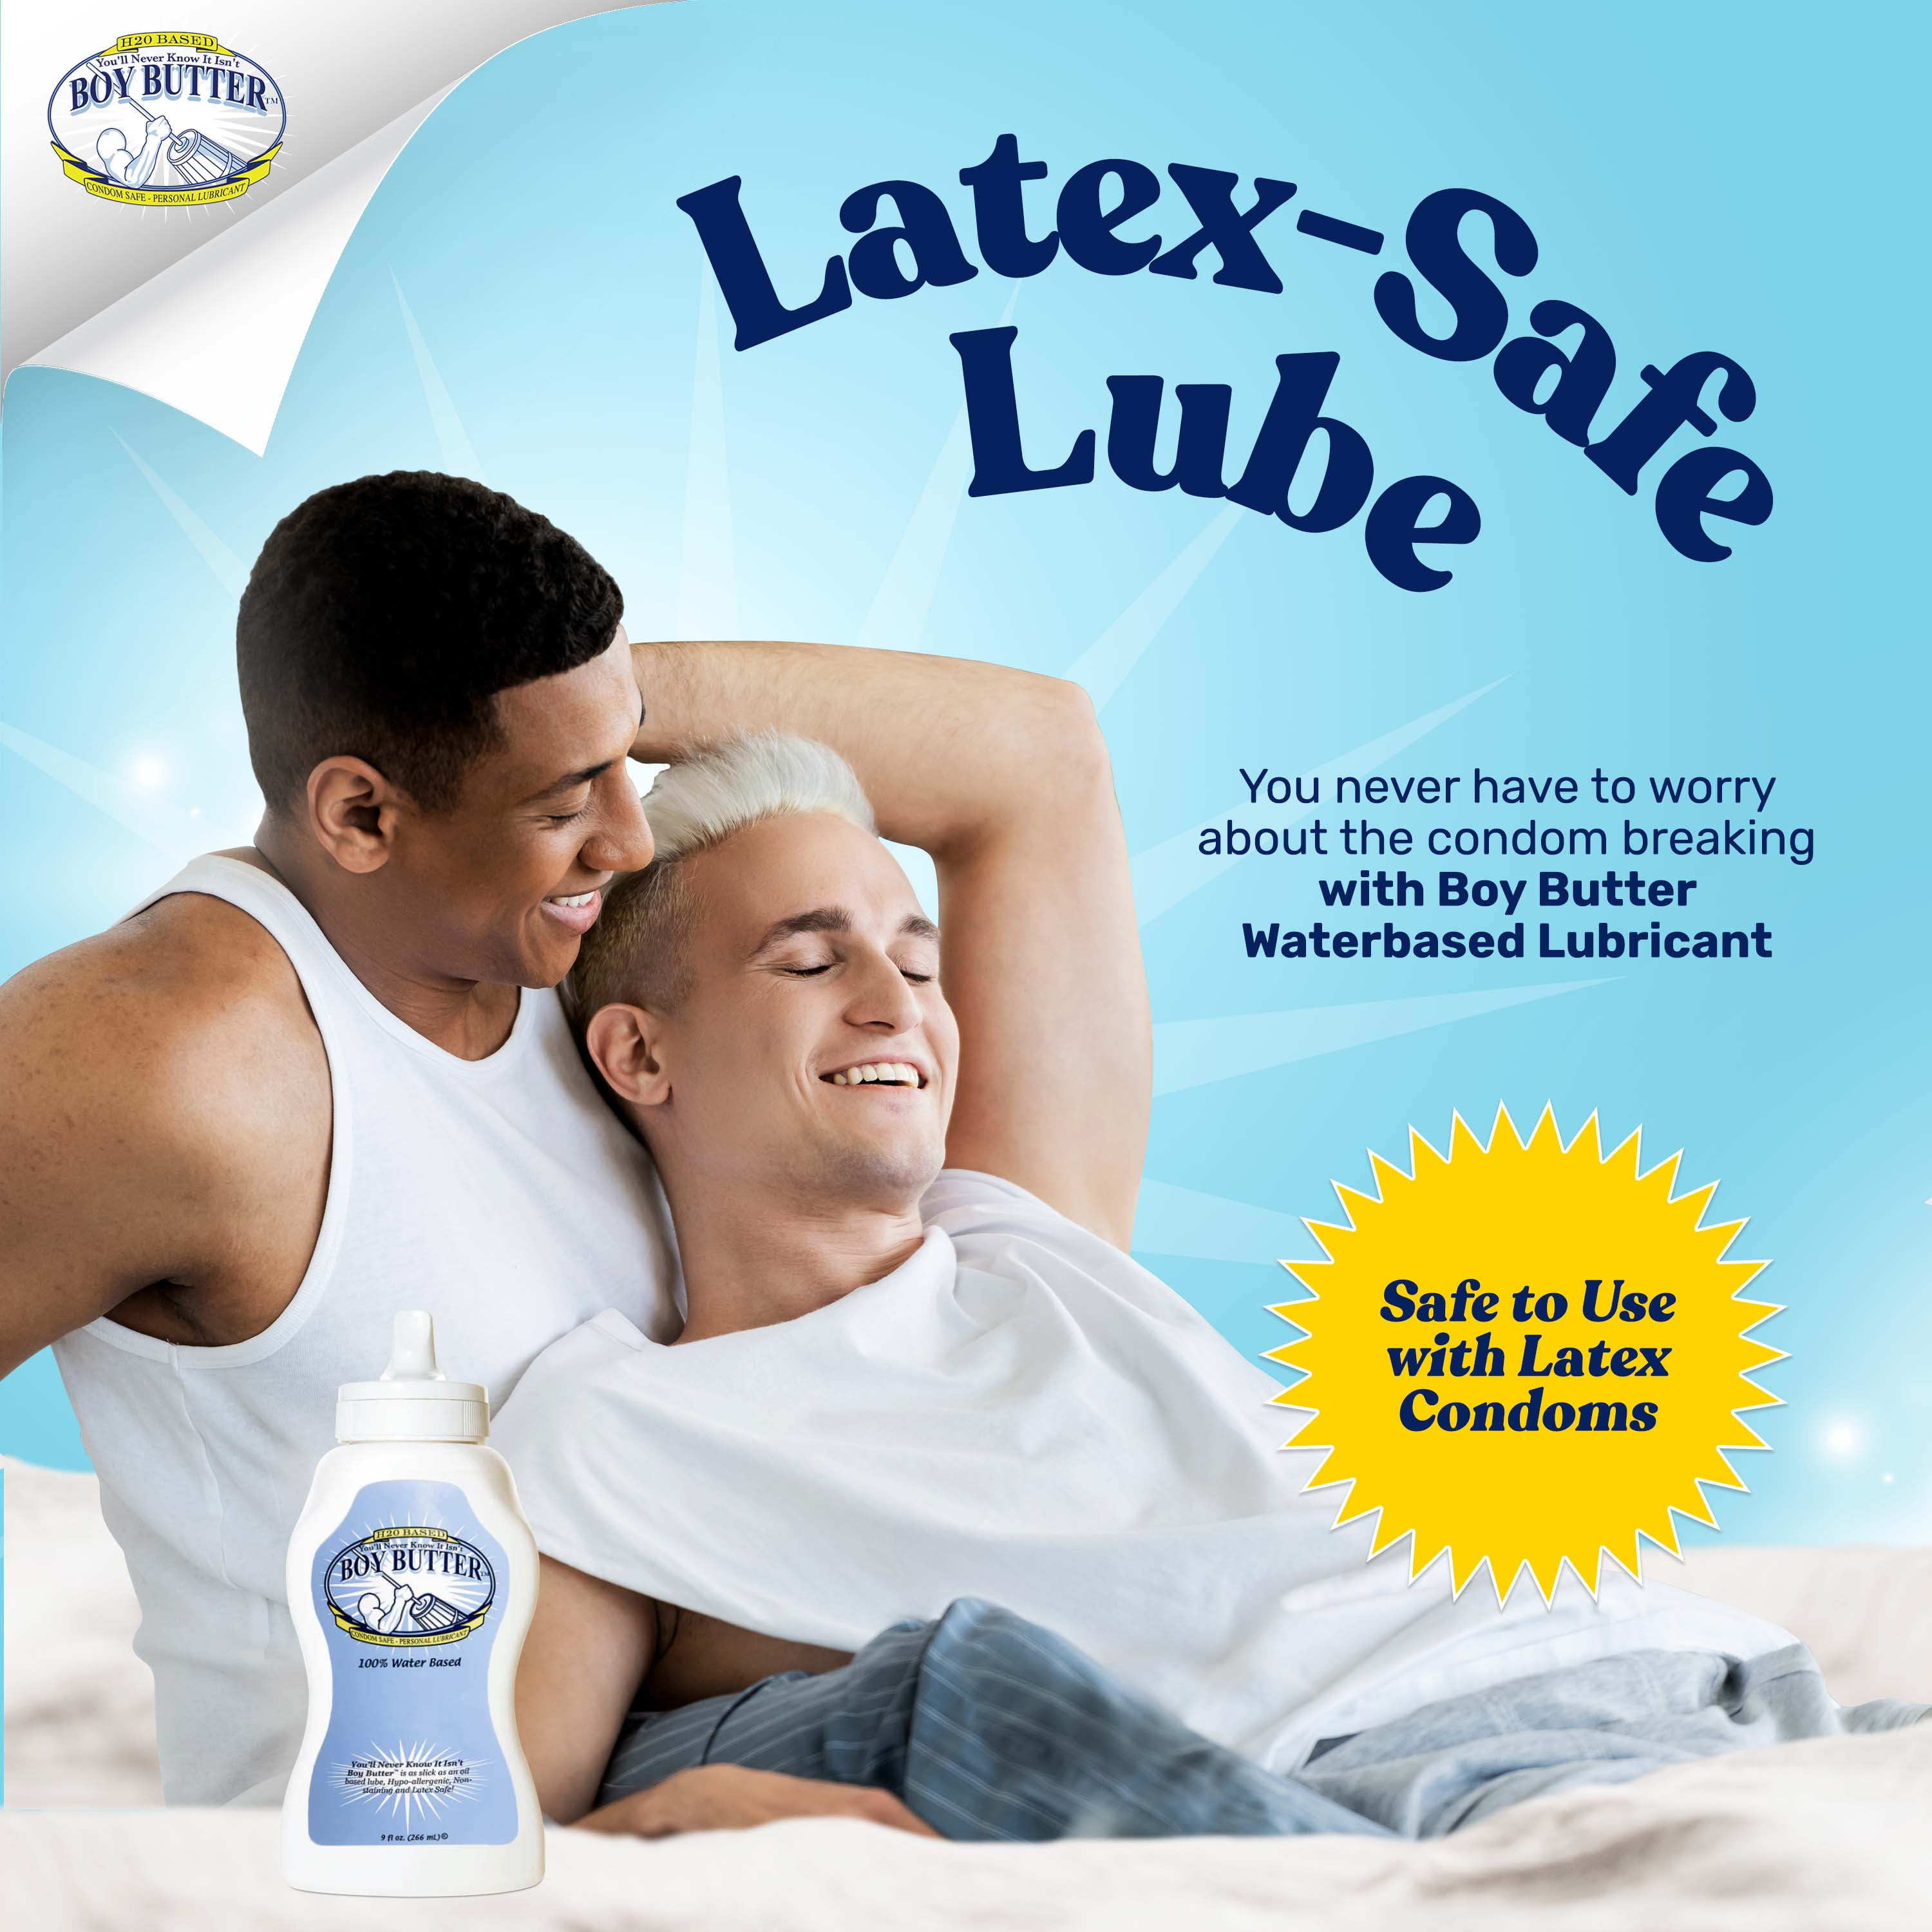 Lube Tube ~ Boy Butter H2O Formula 6 oz